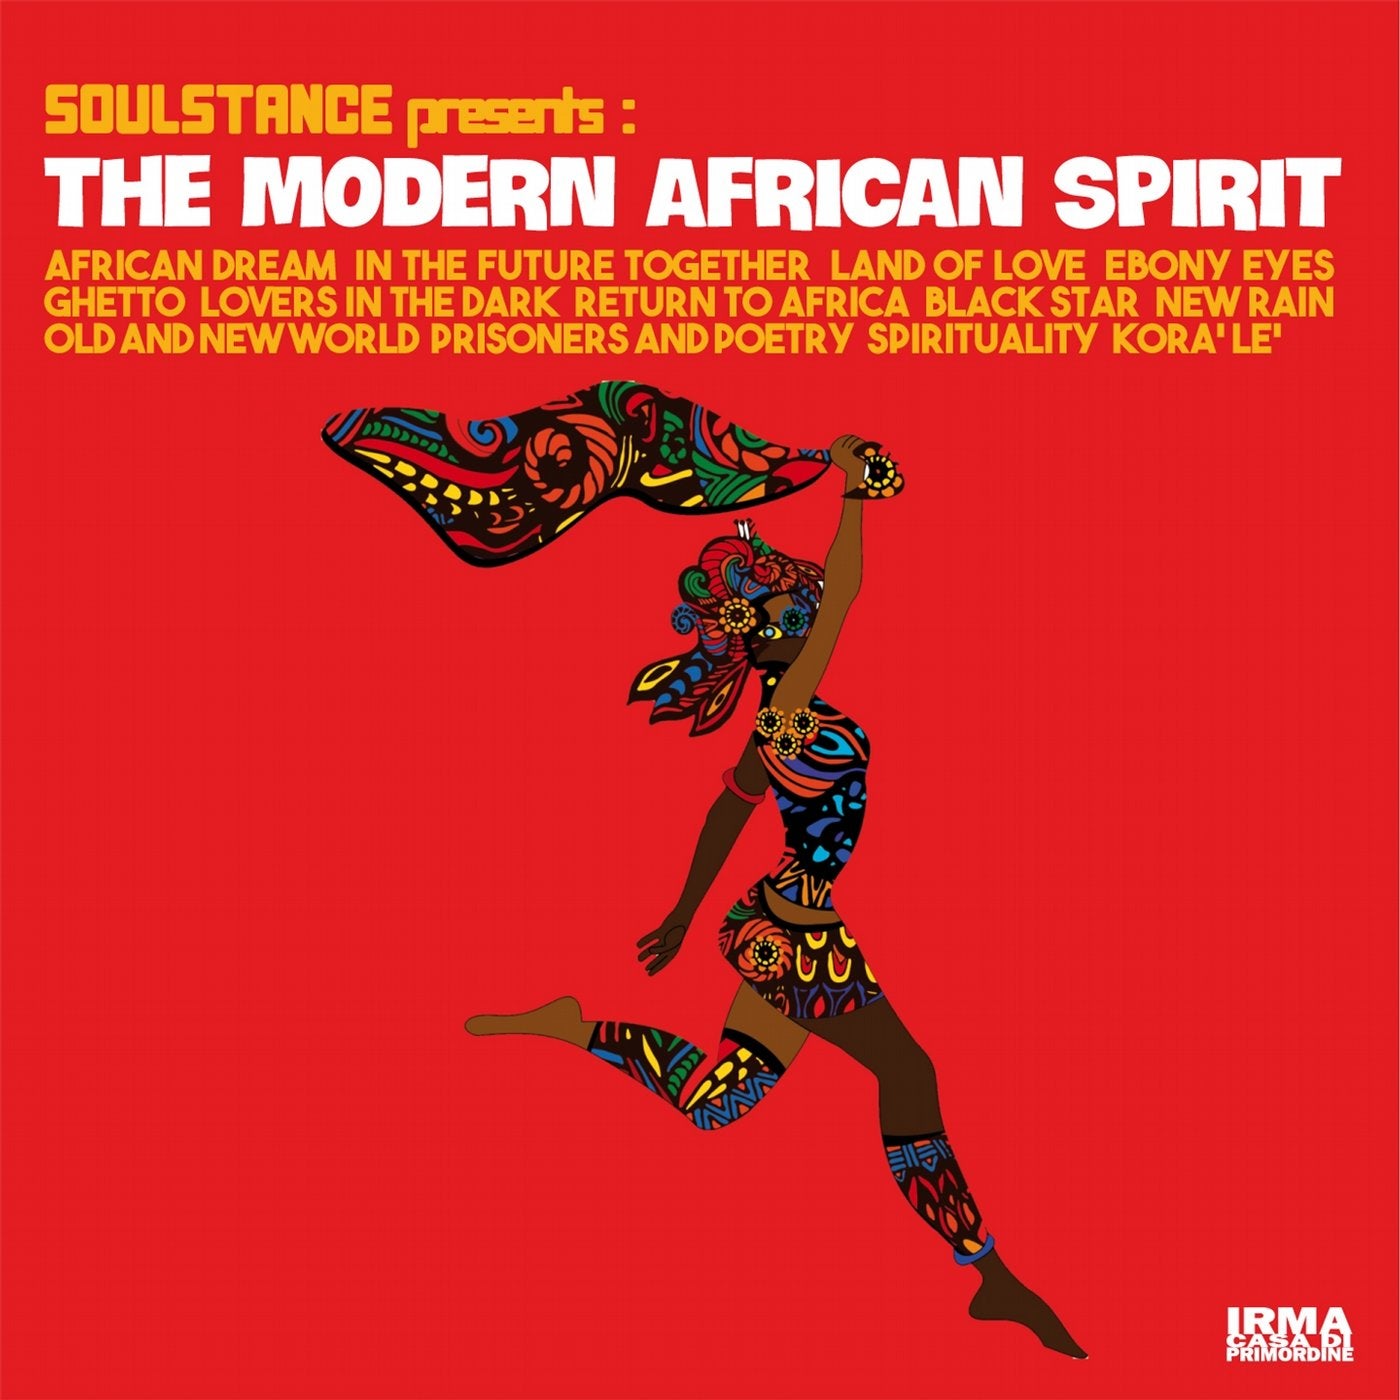 The Modern African Spirit